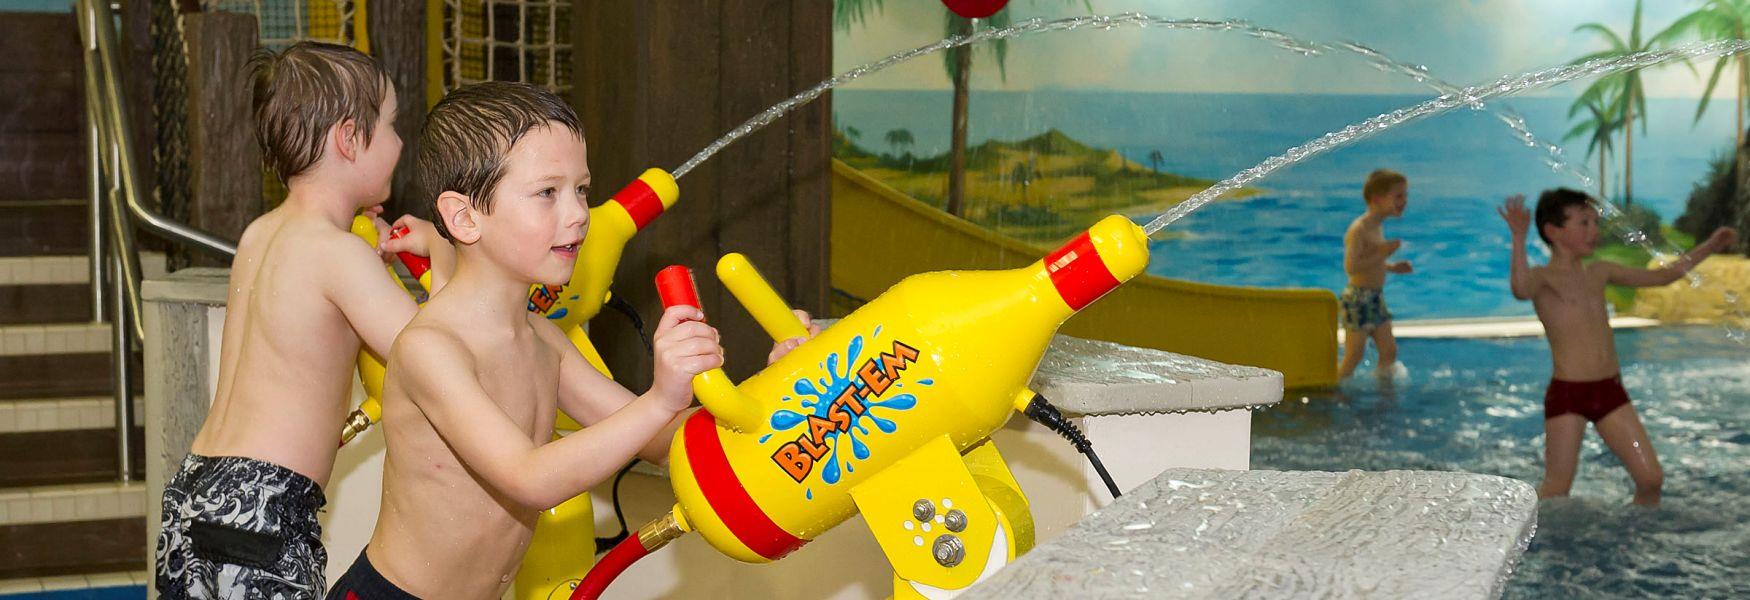 Children will love the LEGO Pirates Themed splash pool at the LEGOLAND hotel